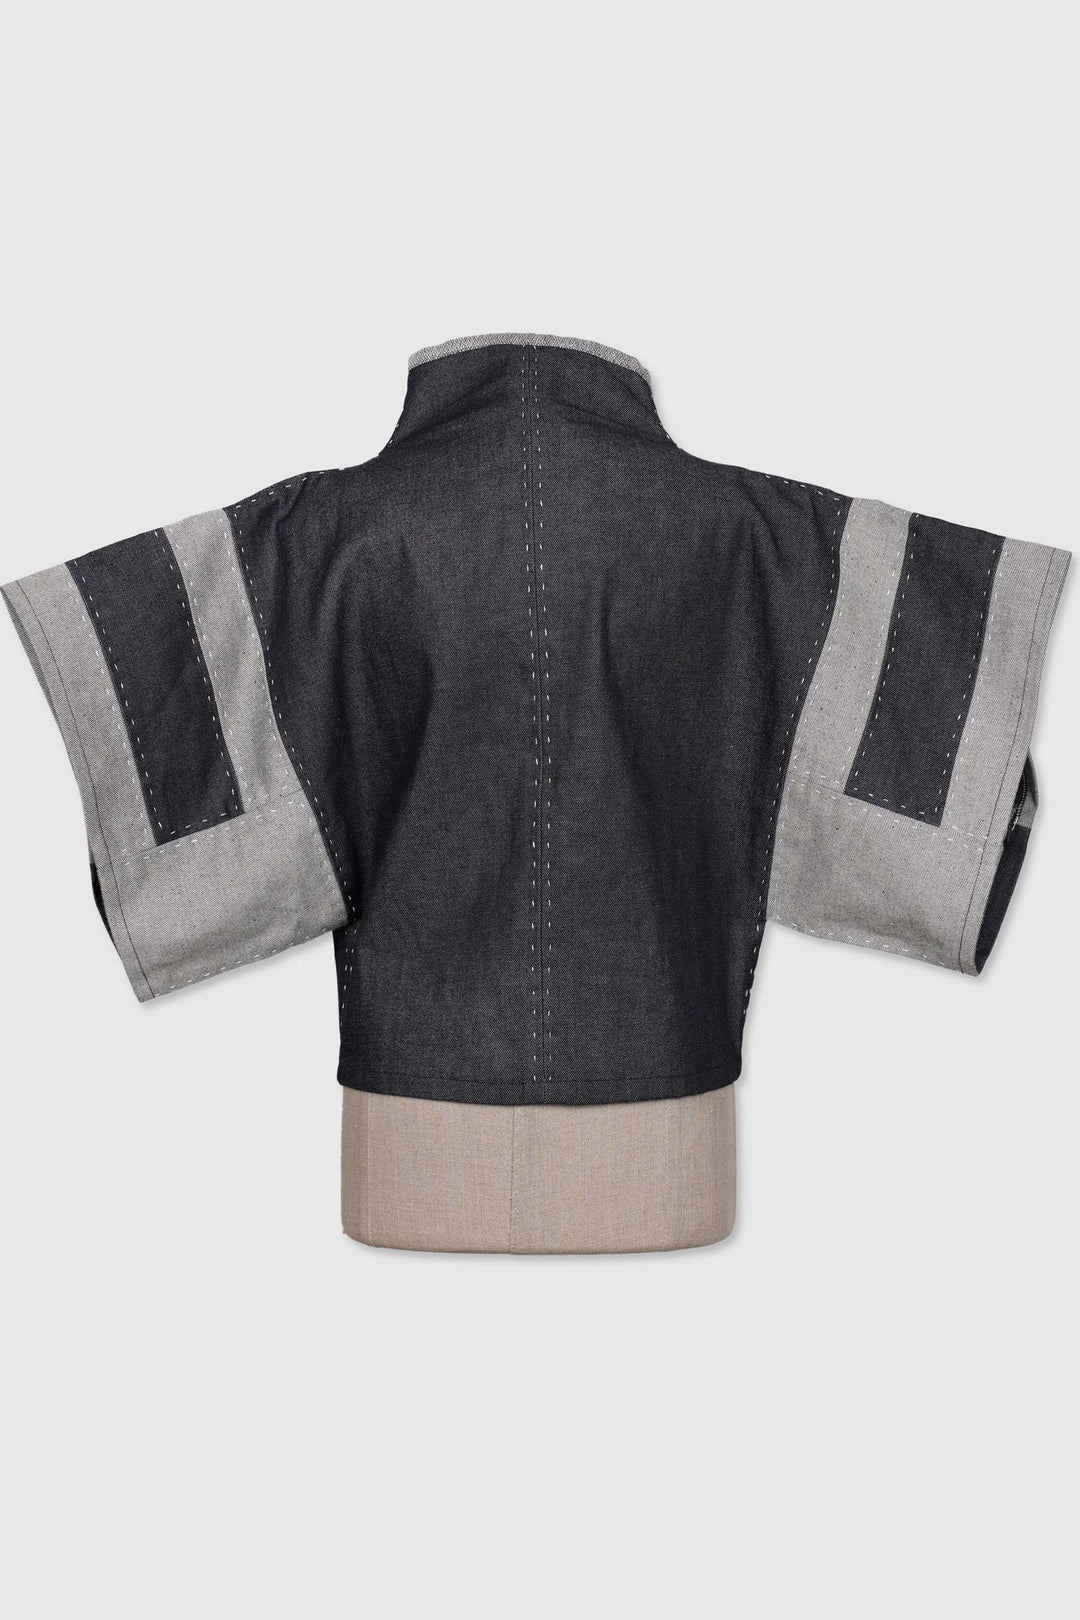 Japanese Contemporary Reversible Patchwork Japanese Denim Jacket